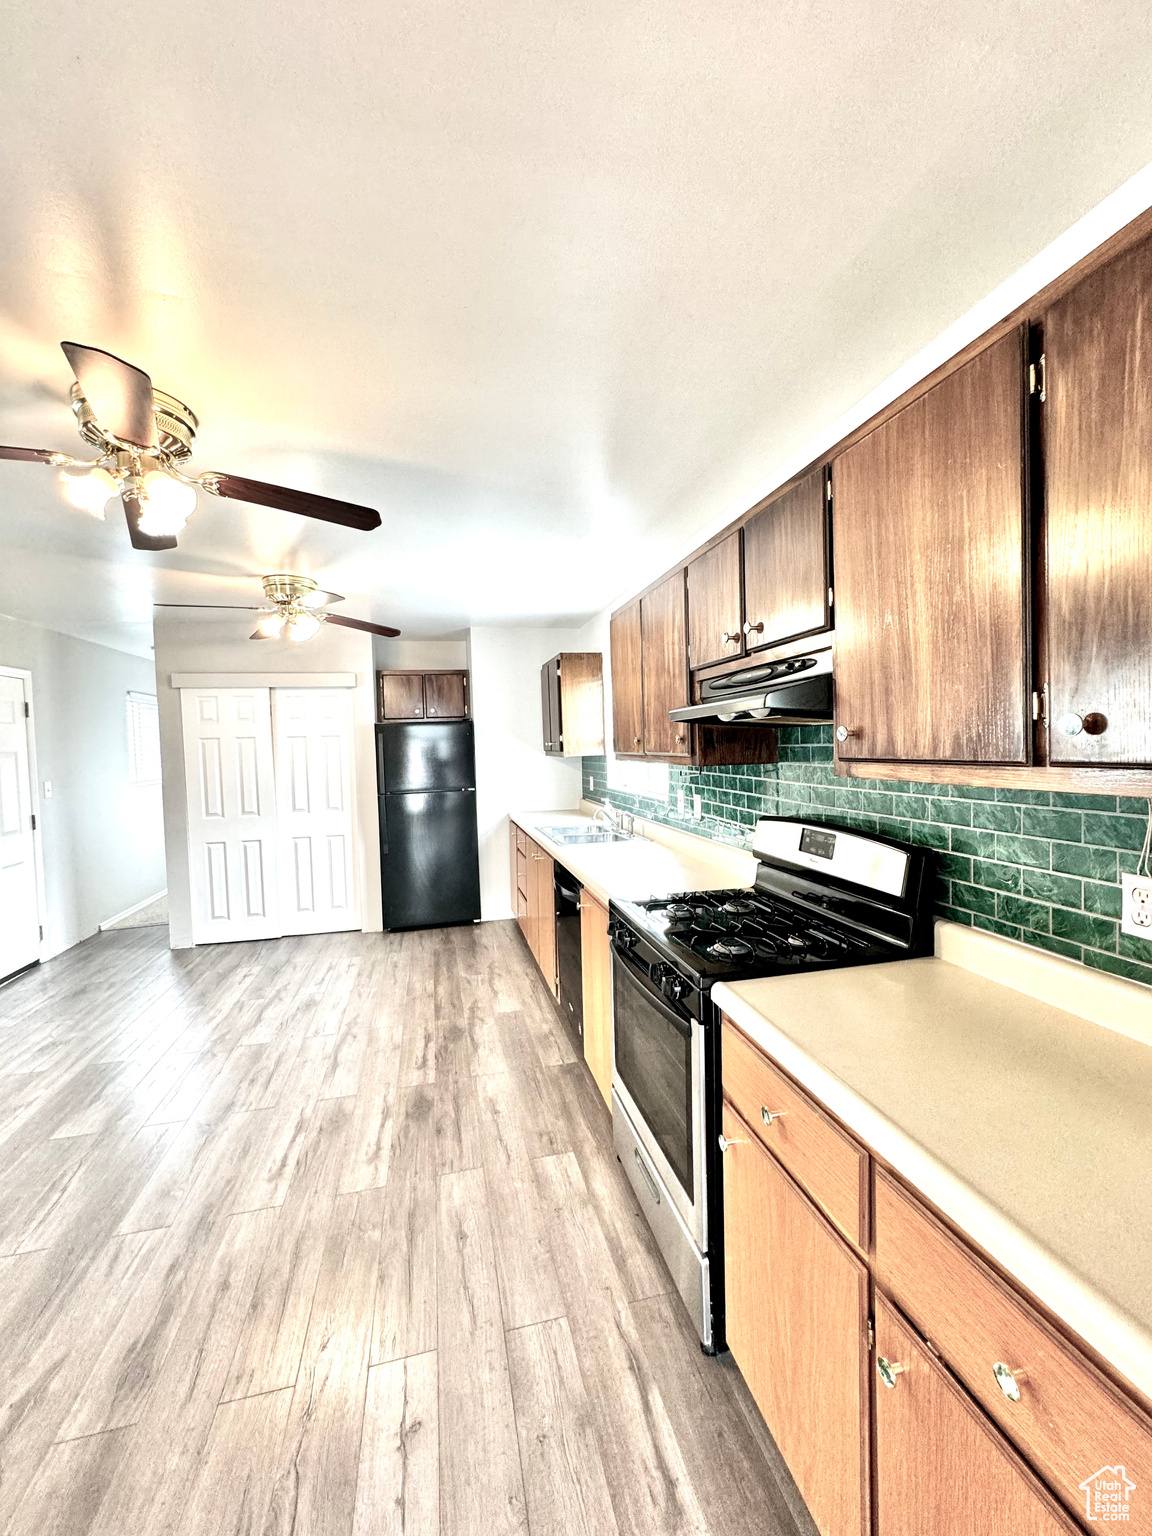 Kitchen featuring ceiling fan, sink, light hardwood / wood-style floors, tasteful backsplash, and black appliances